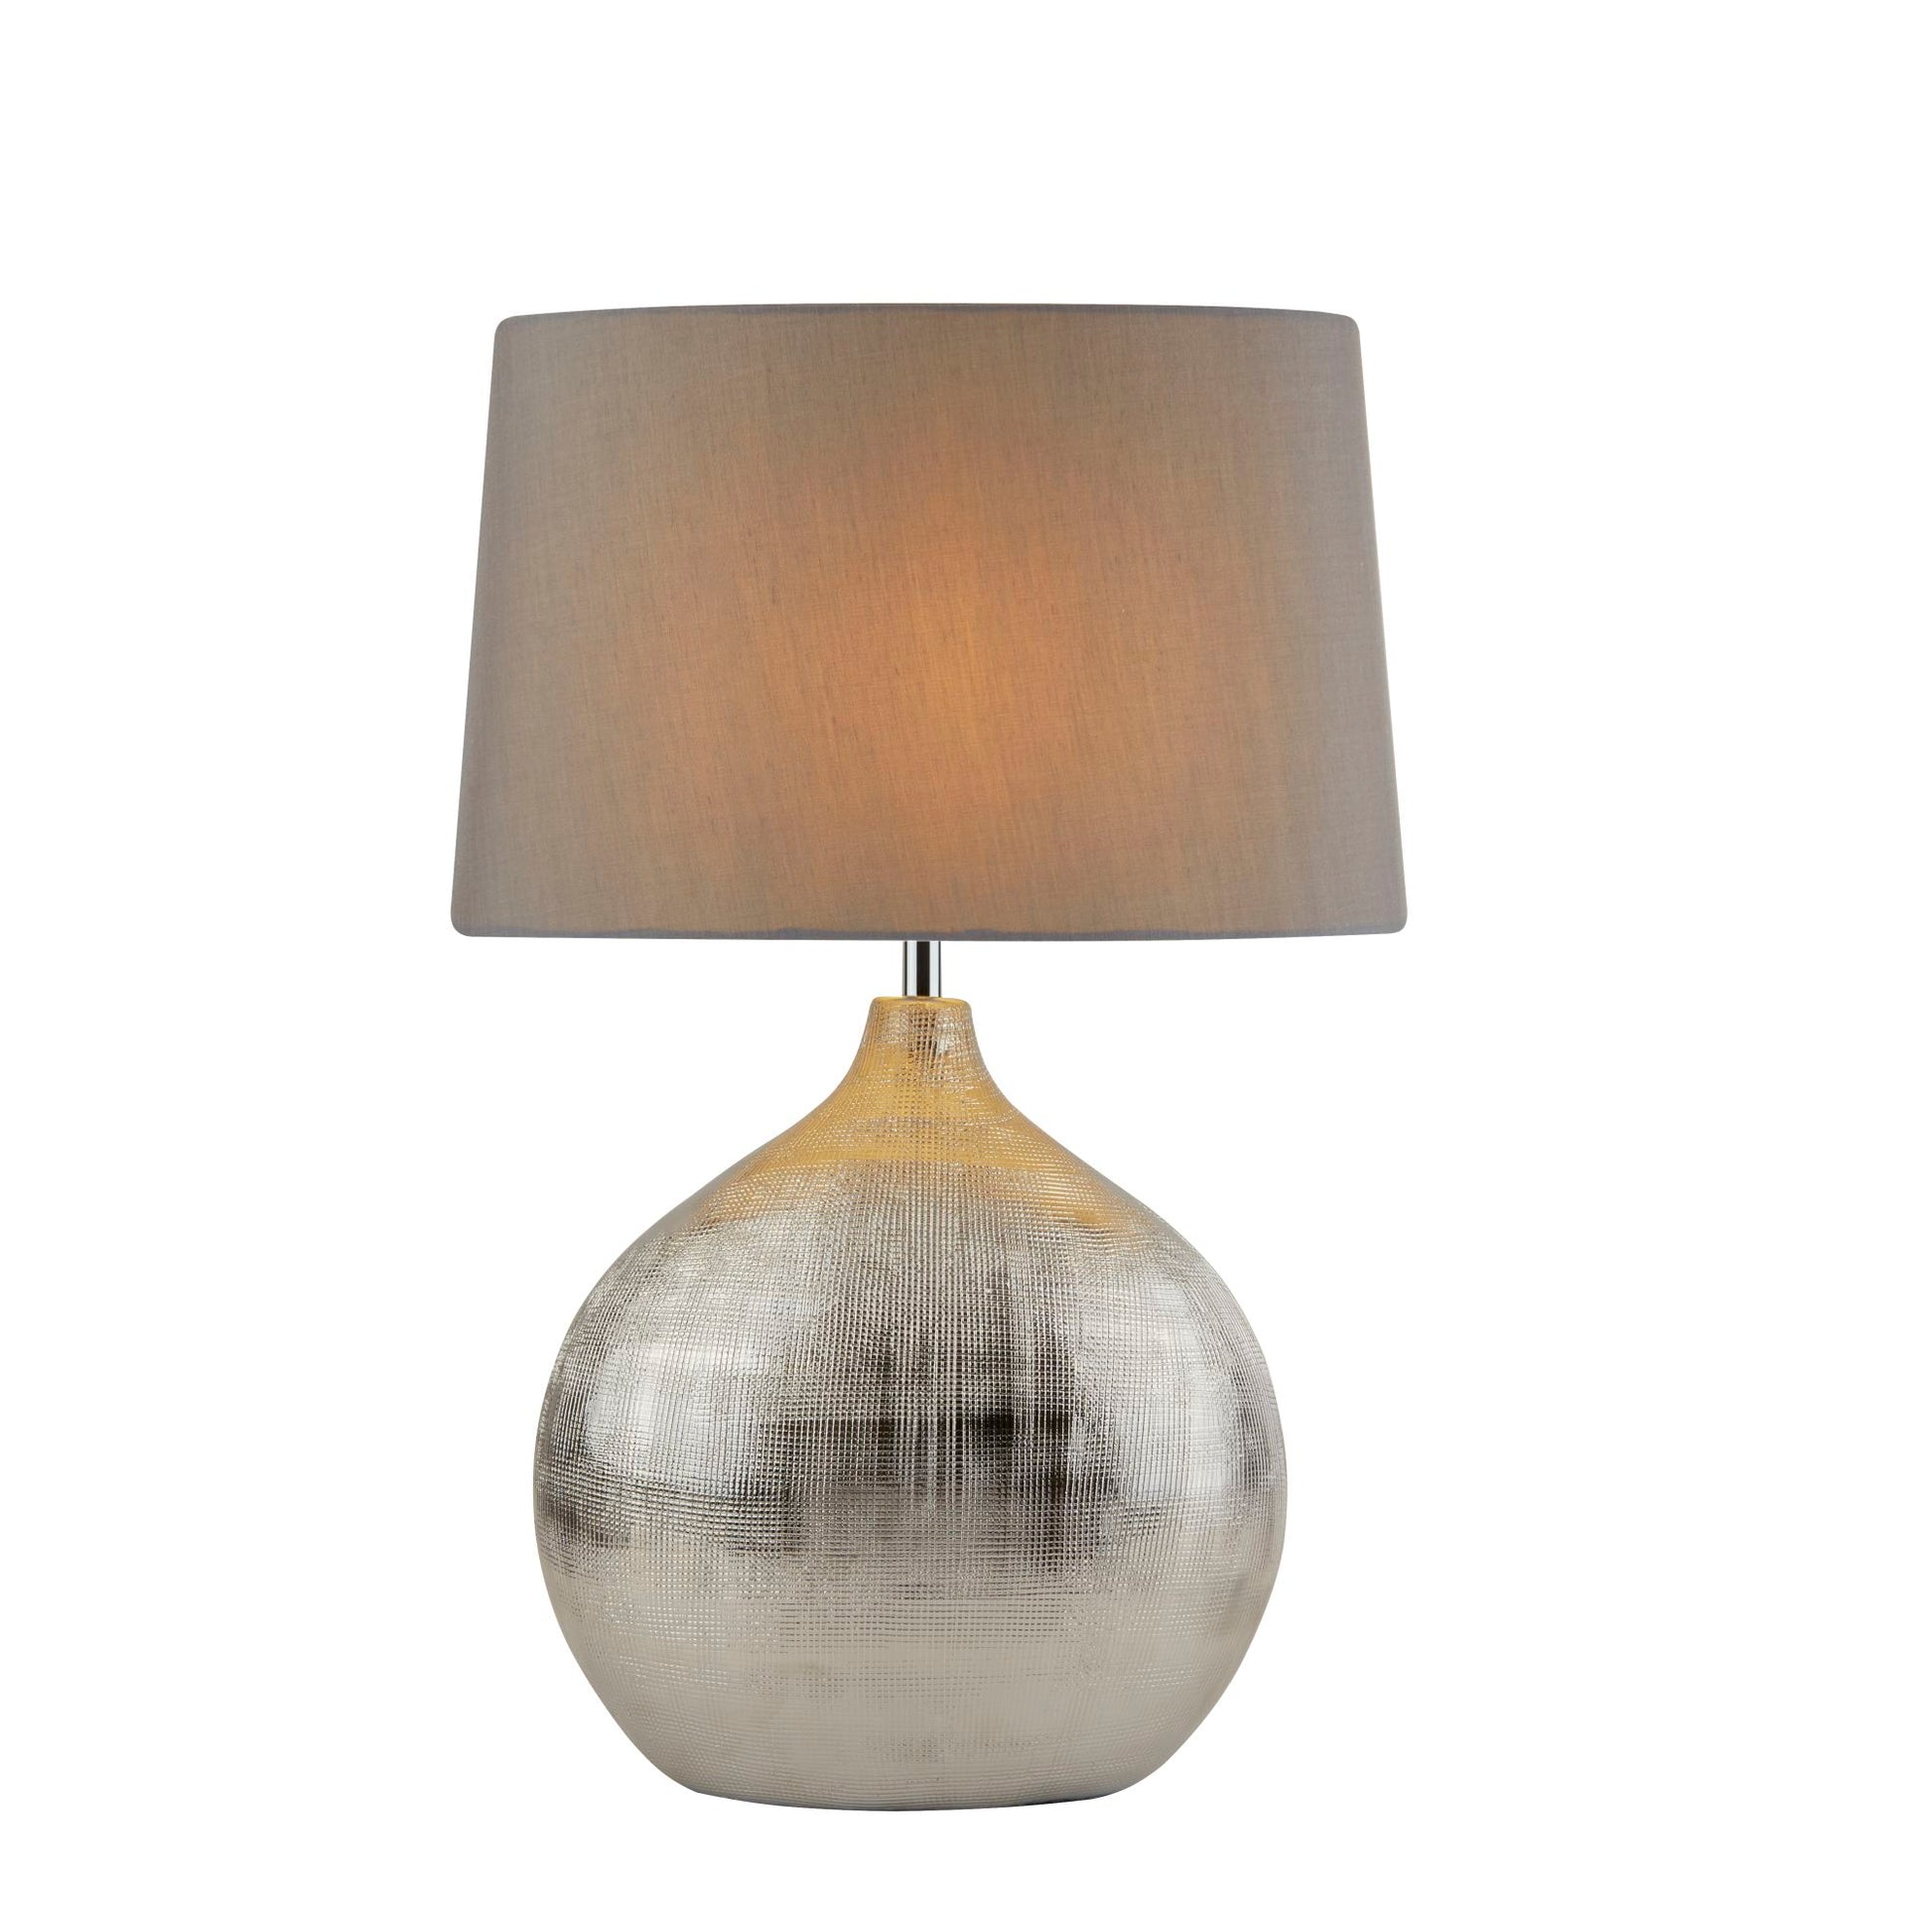 Artisan 1 Light Chrome Table Lamp With Round Base Grey Shade